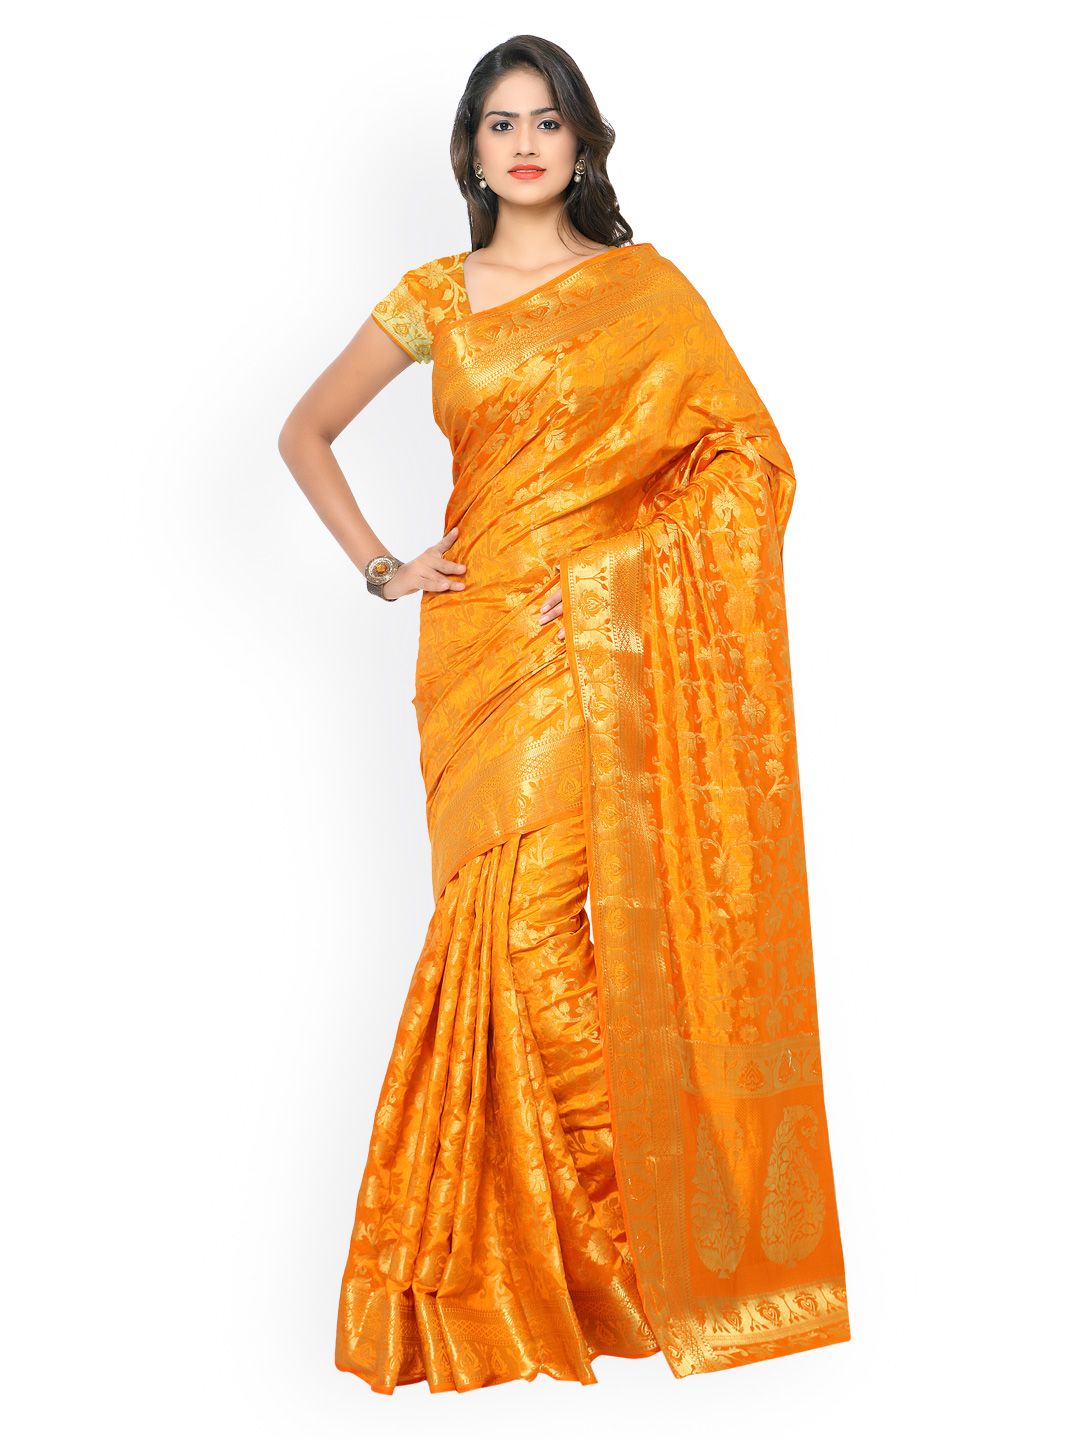 Varkala Silk Sarees Orange Kanjeevaram Tussar Silk Traditional Saree Price in India